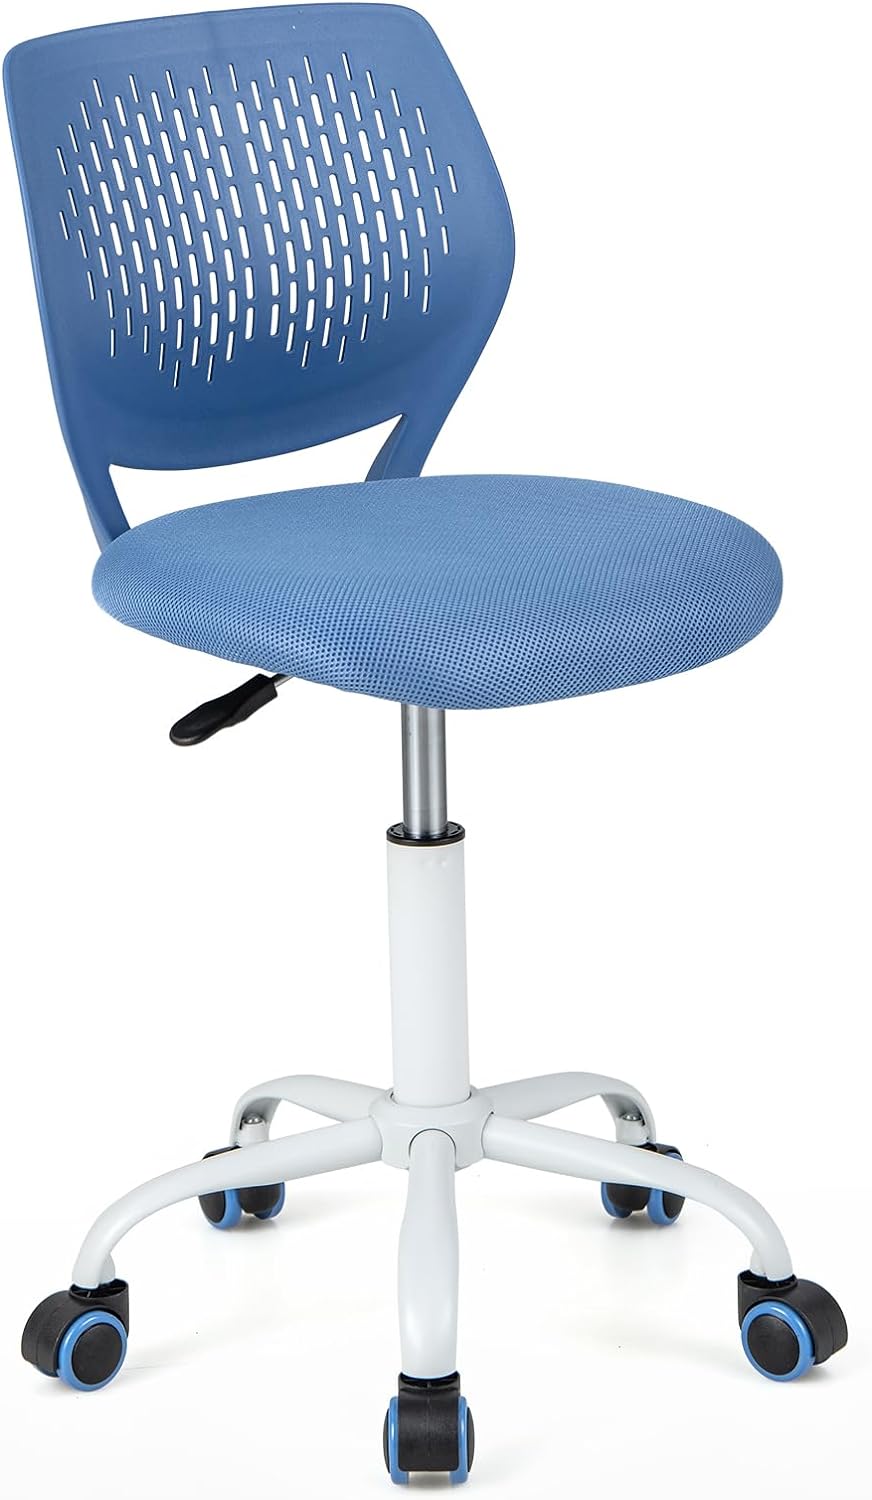 Giantex Kids Desk Chair, Children Armless Study Chair with Adjustable Height, for Girls Boys Teens